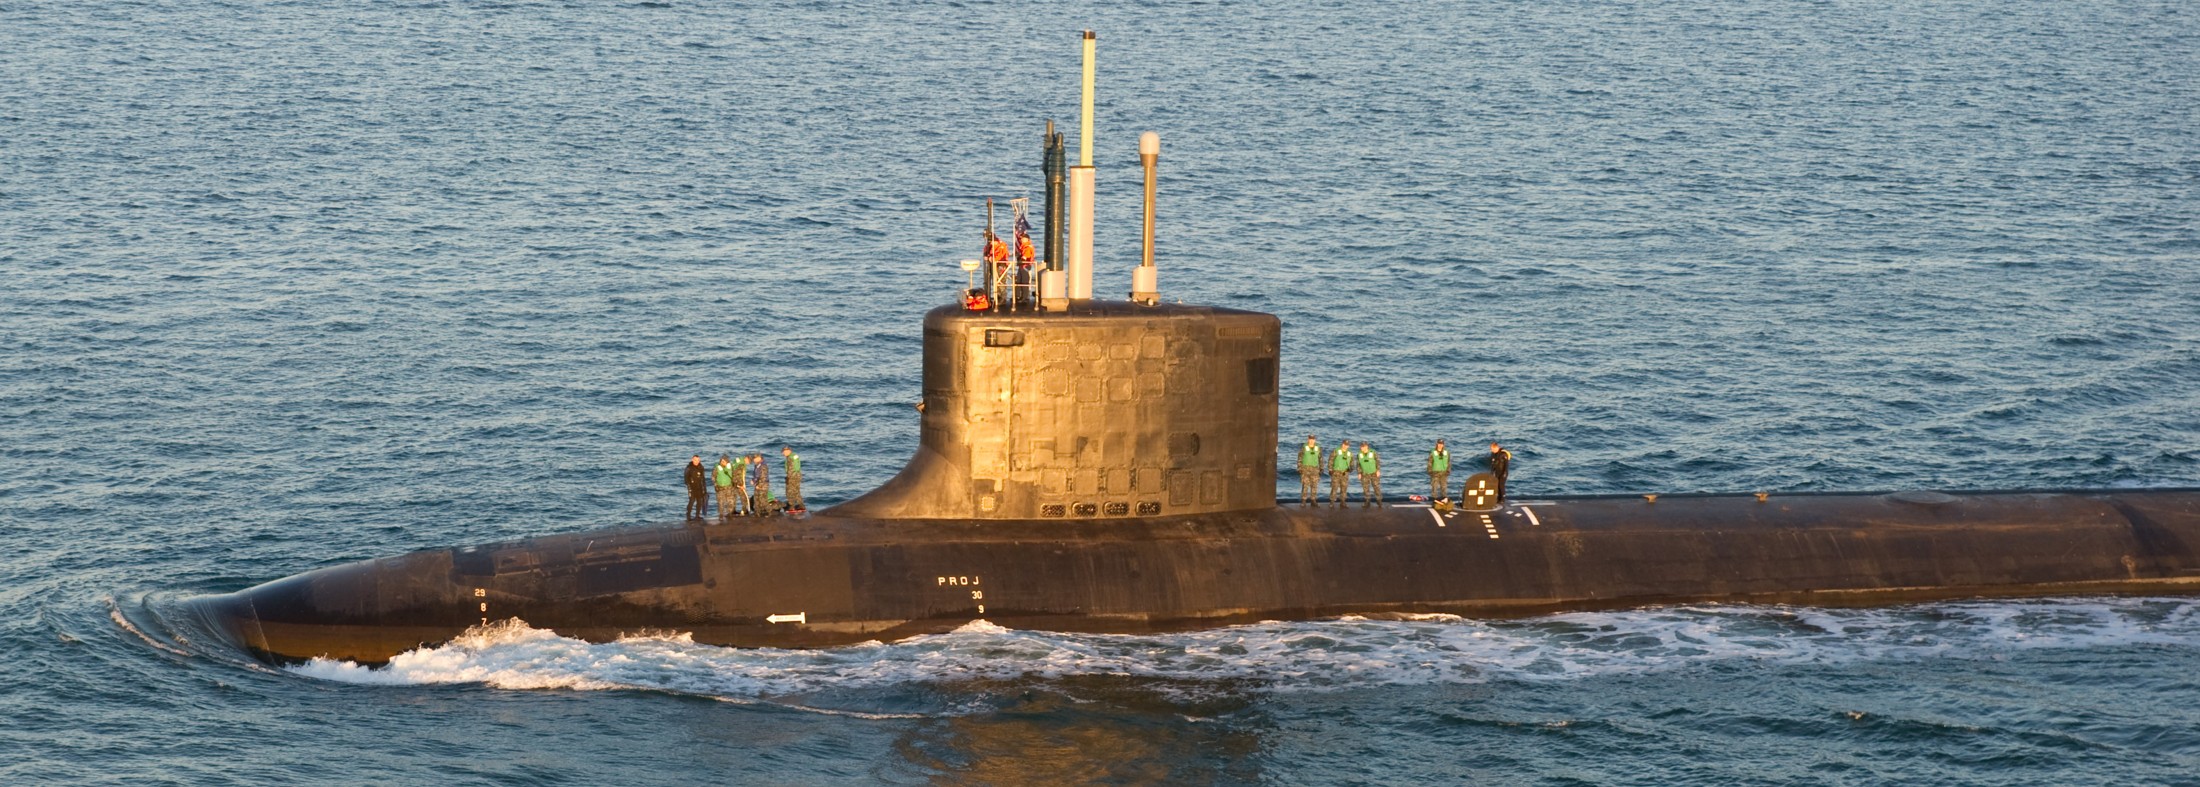 ssn-782 uss mississippi virginia class attack submarine us navy 21